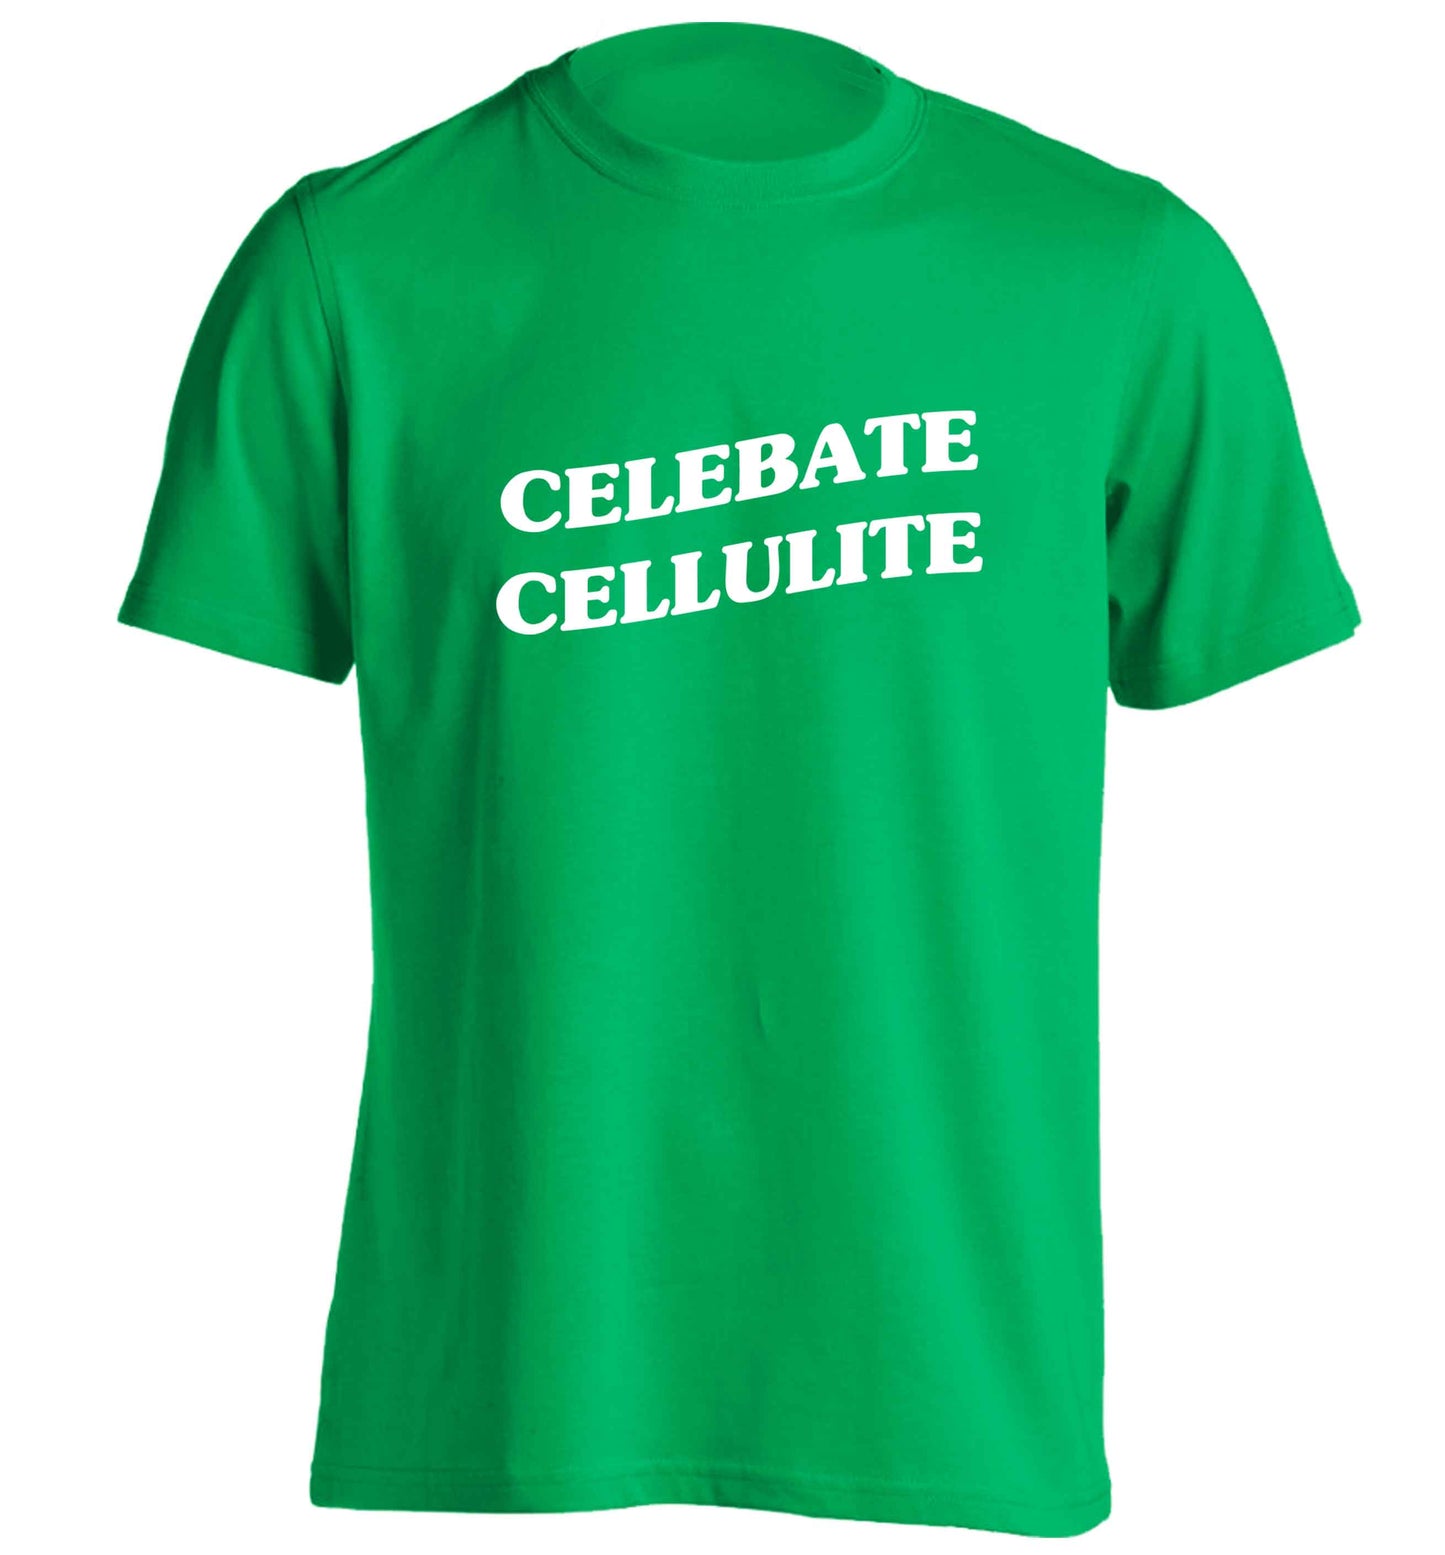 Celebrate cellulite adults unisex green Tshirt 2XL